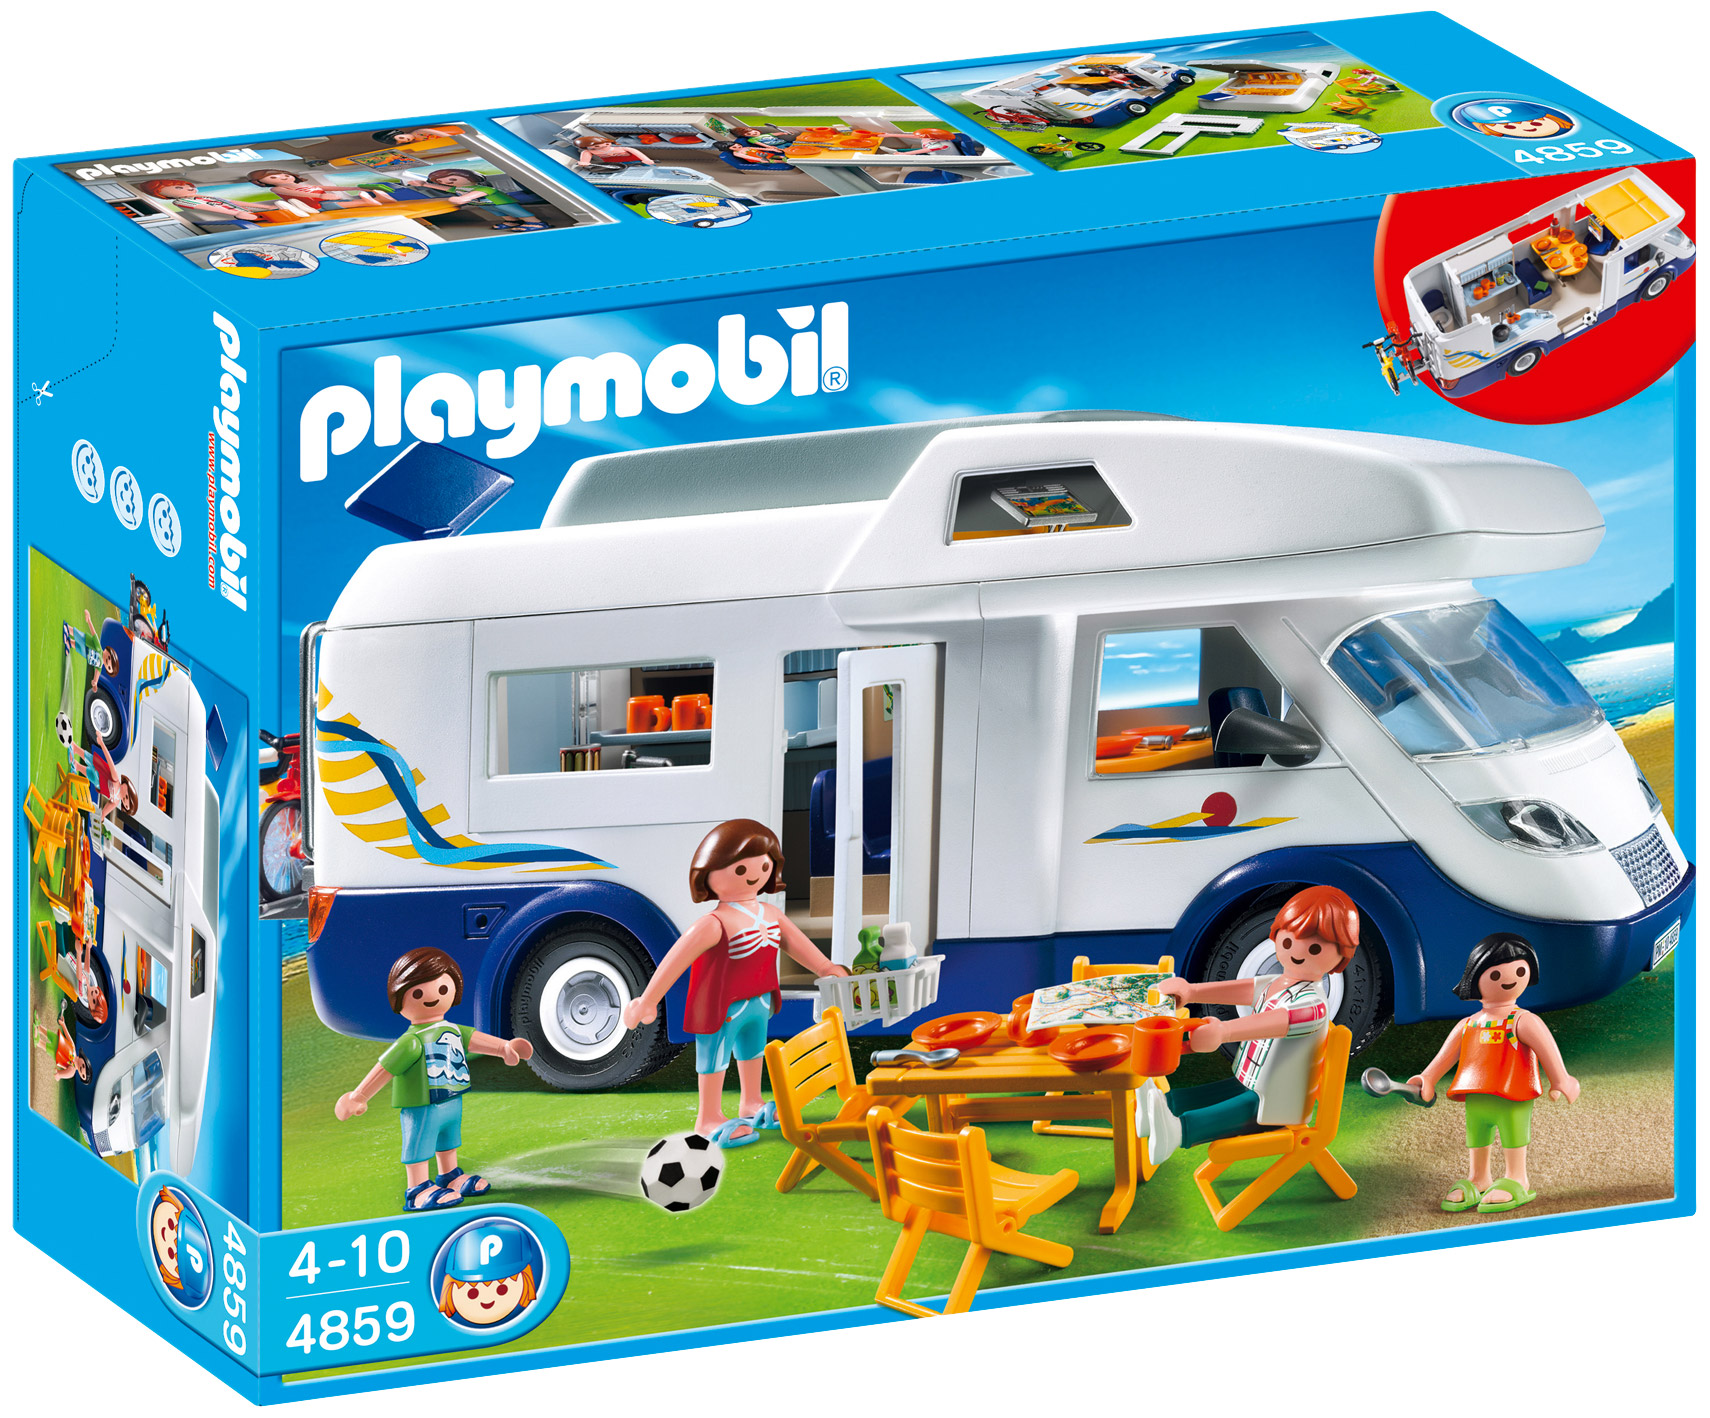 Playmobil Summer Fun 4859 pas cher, Grand camping-car familial